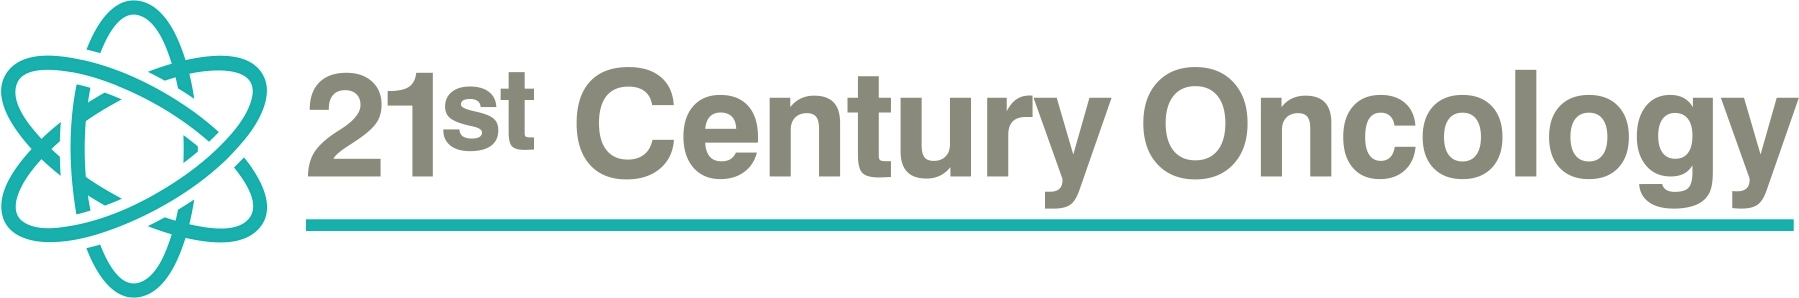 21st_century_oncology-logo